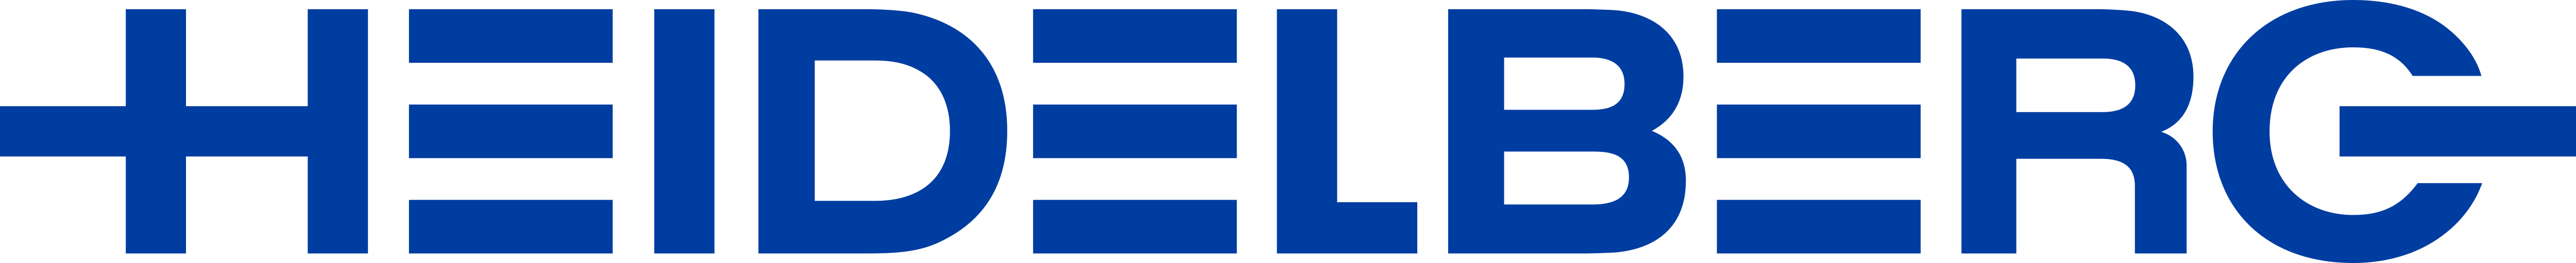 Heidelberger_logo